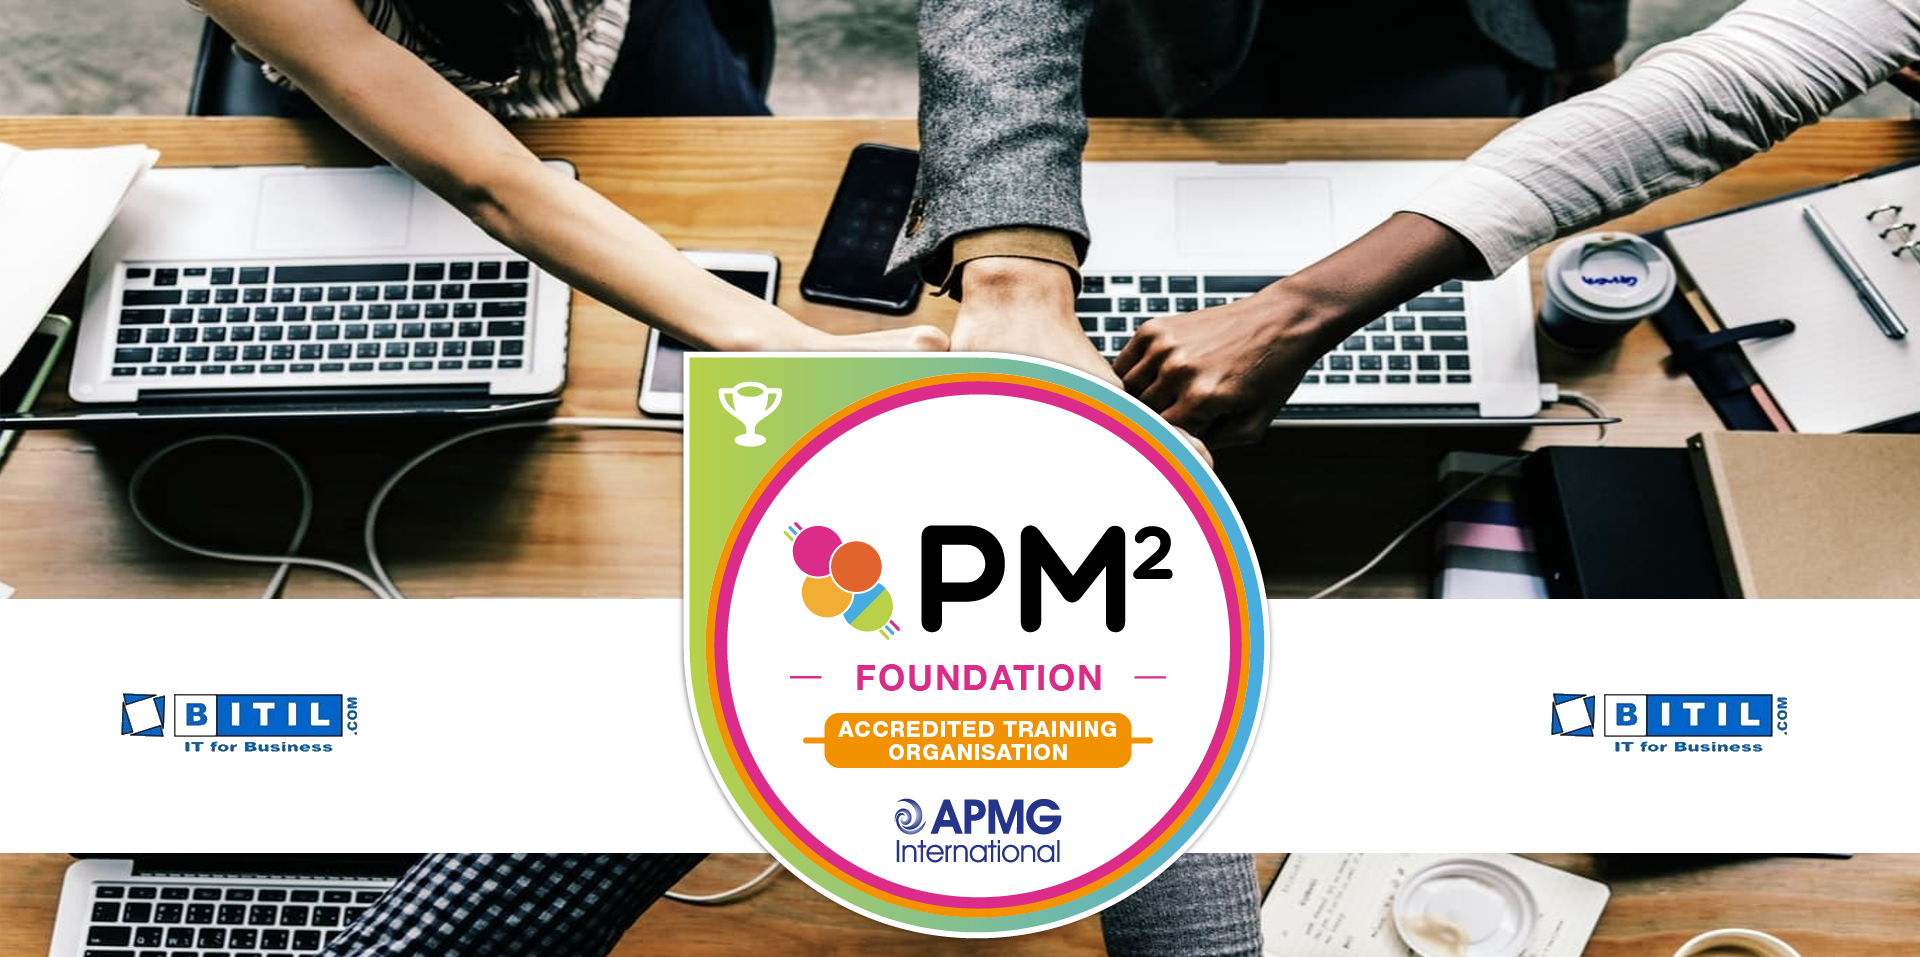 PM² the European Project Management